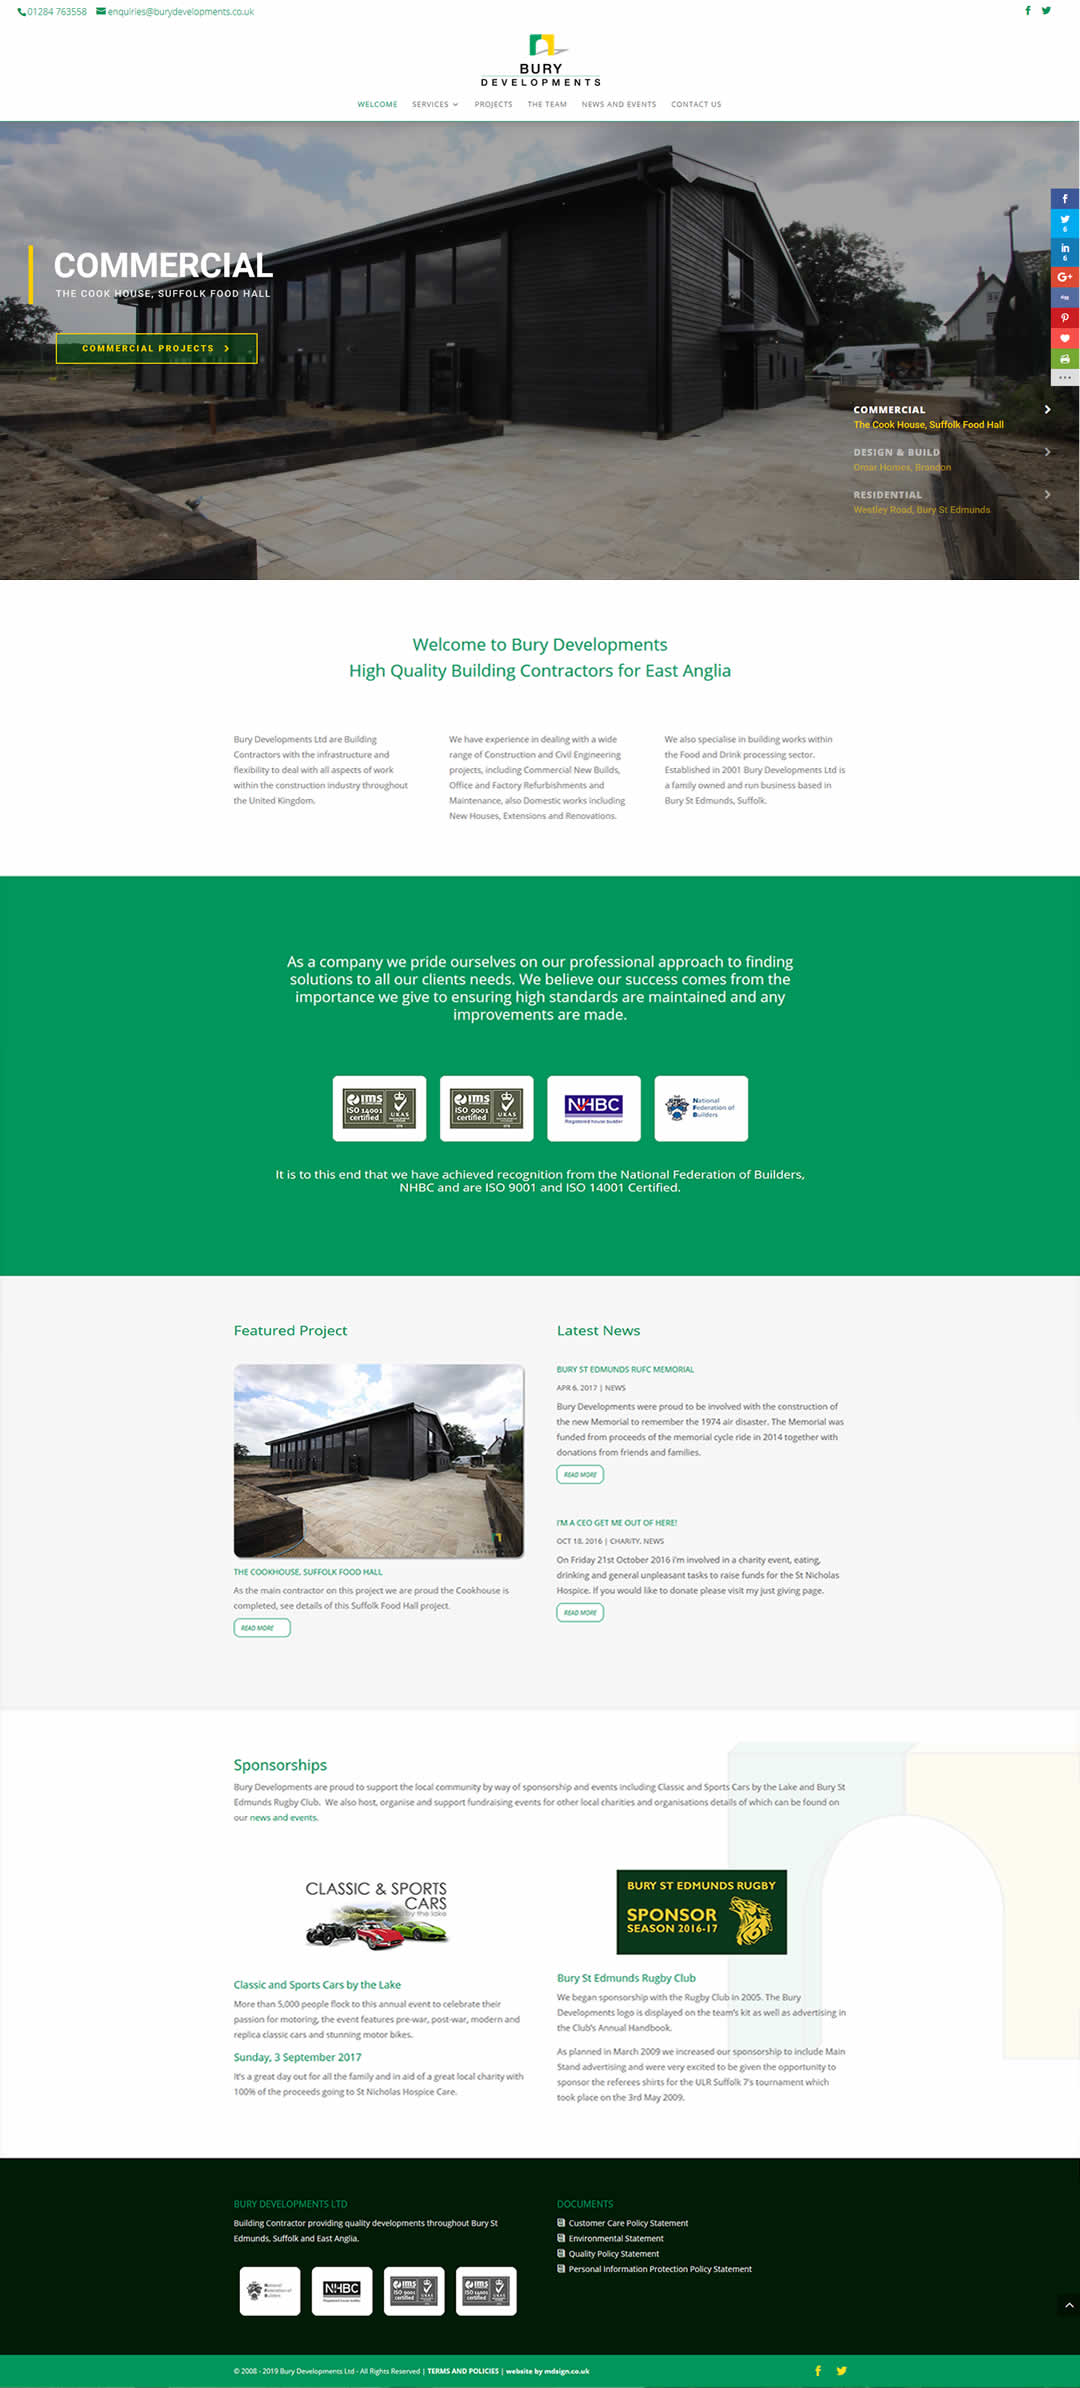 Bury Developments website design by Mdsign Website Design